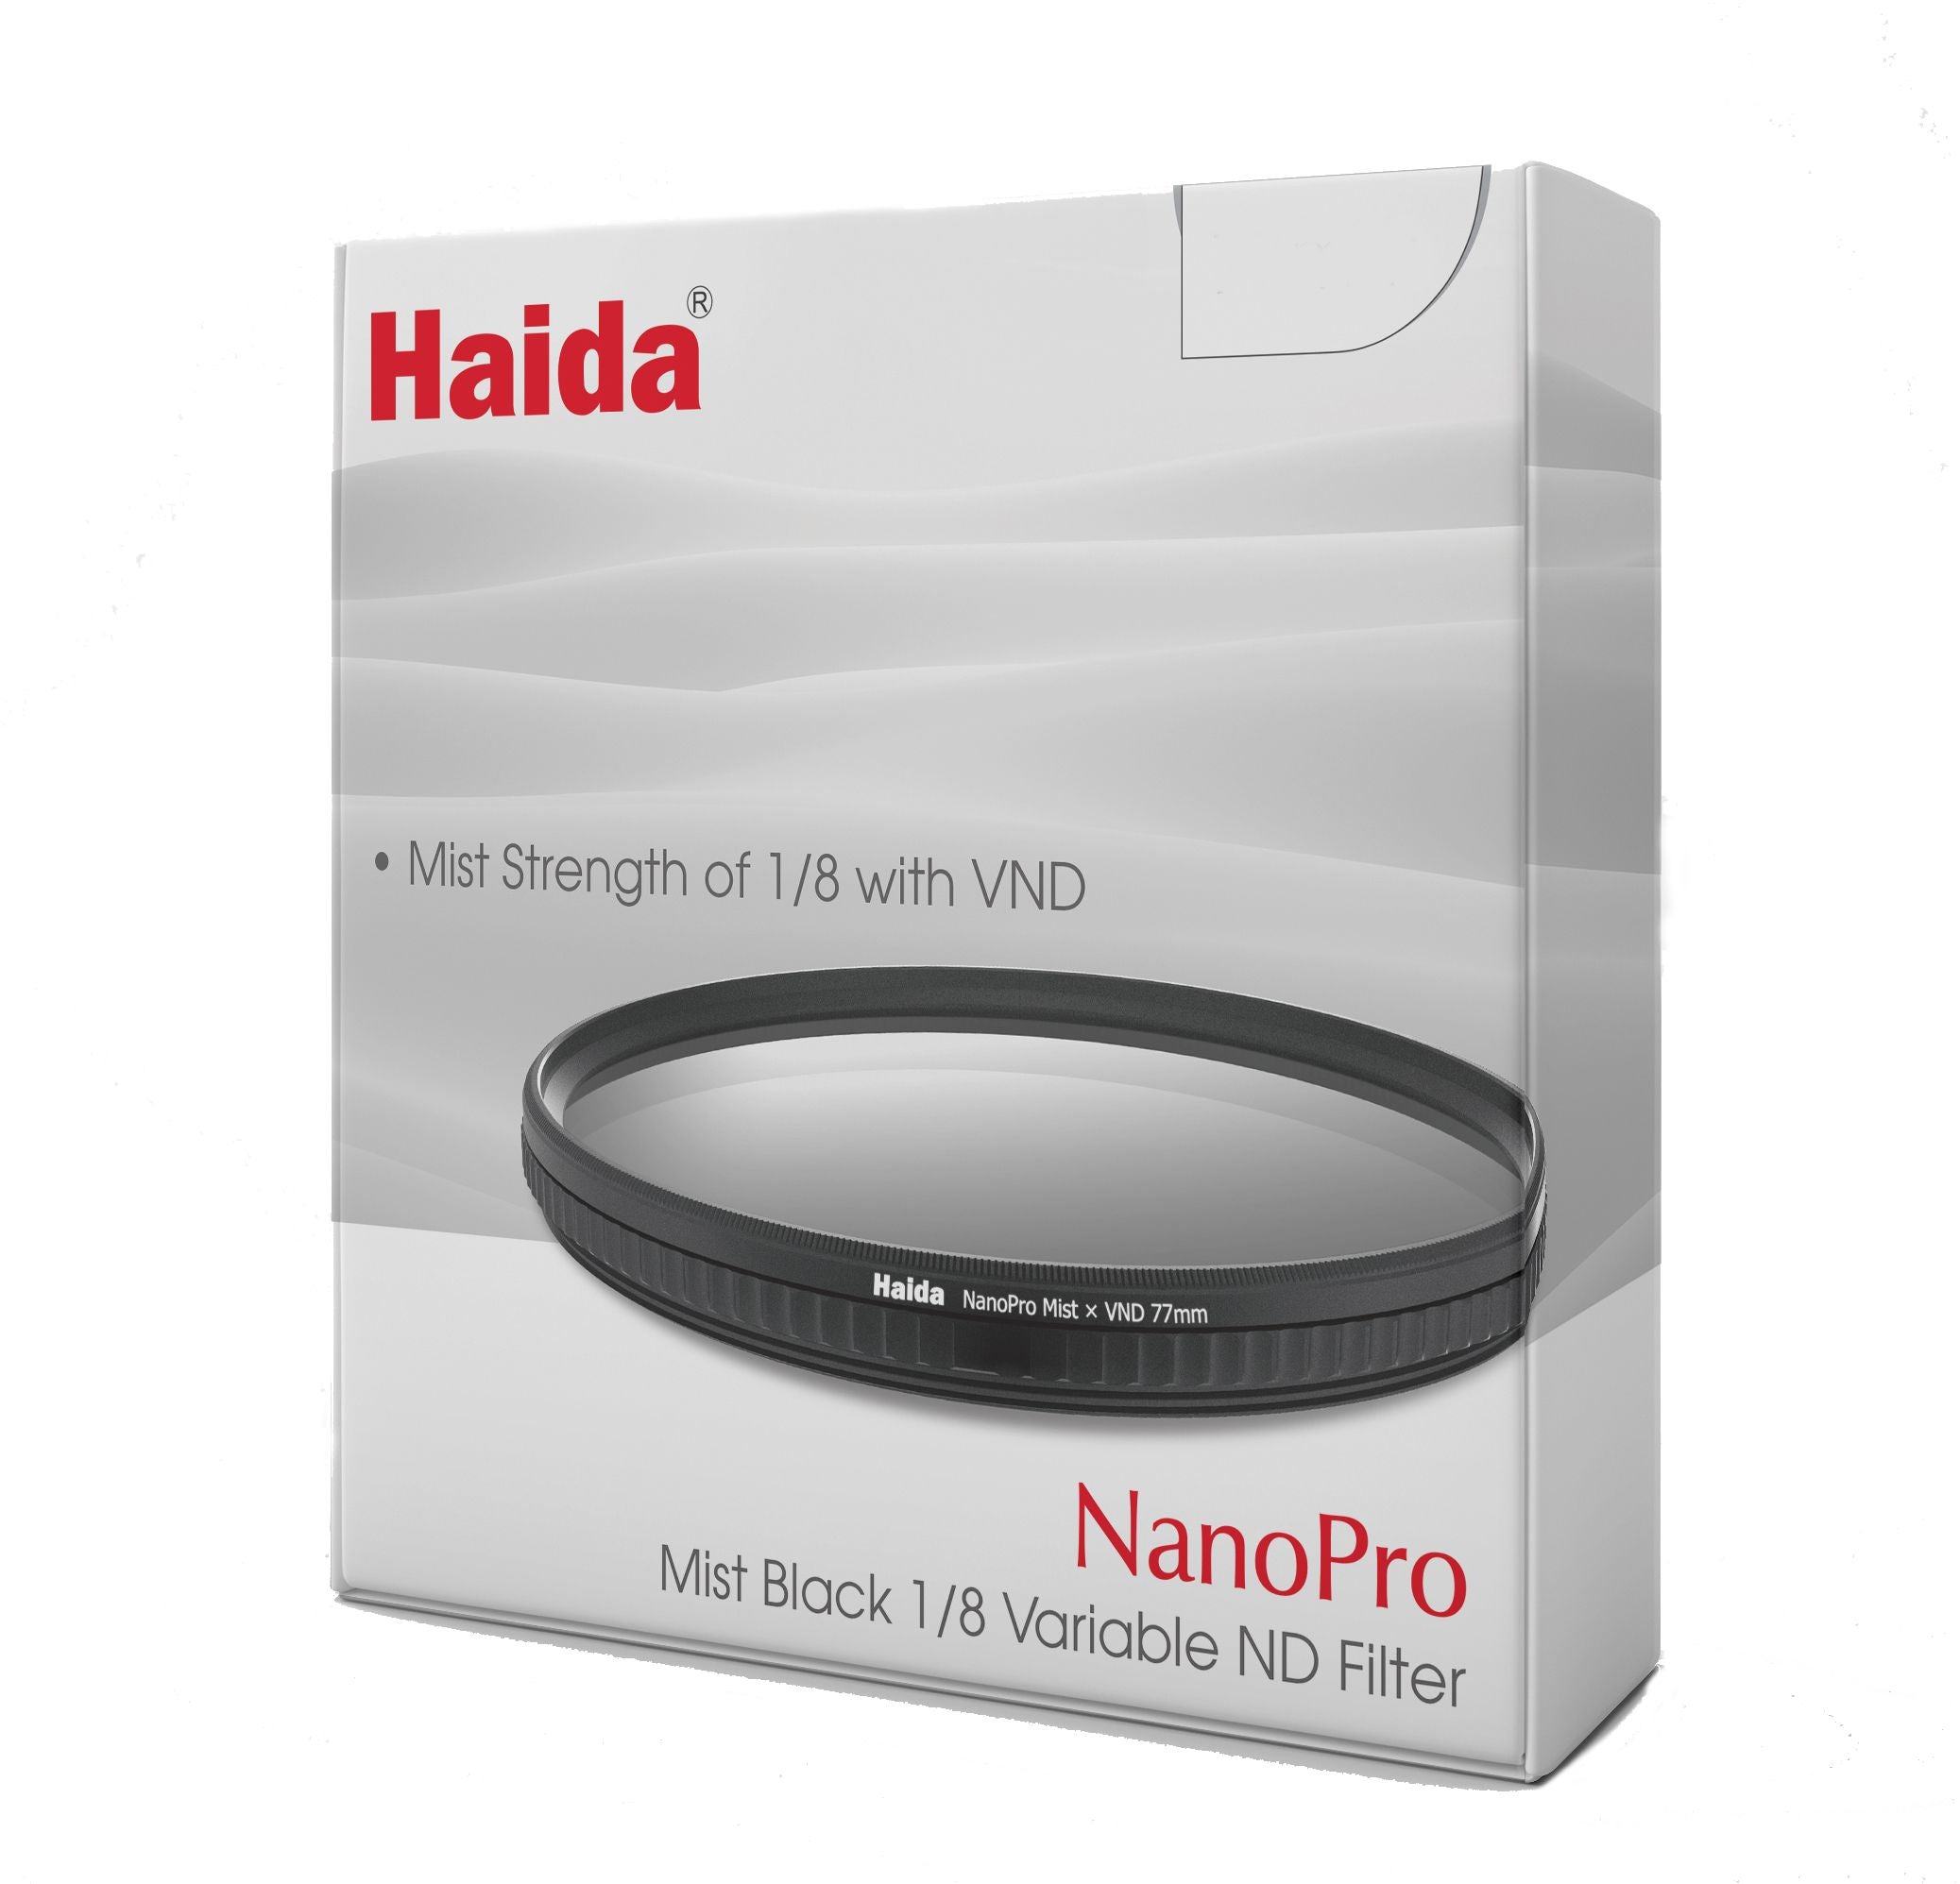 Haida NanoPro Mist Black 1/8 Filtro ND Variabile 82mm